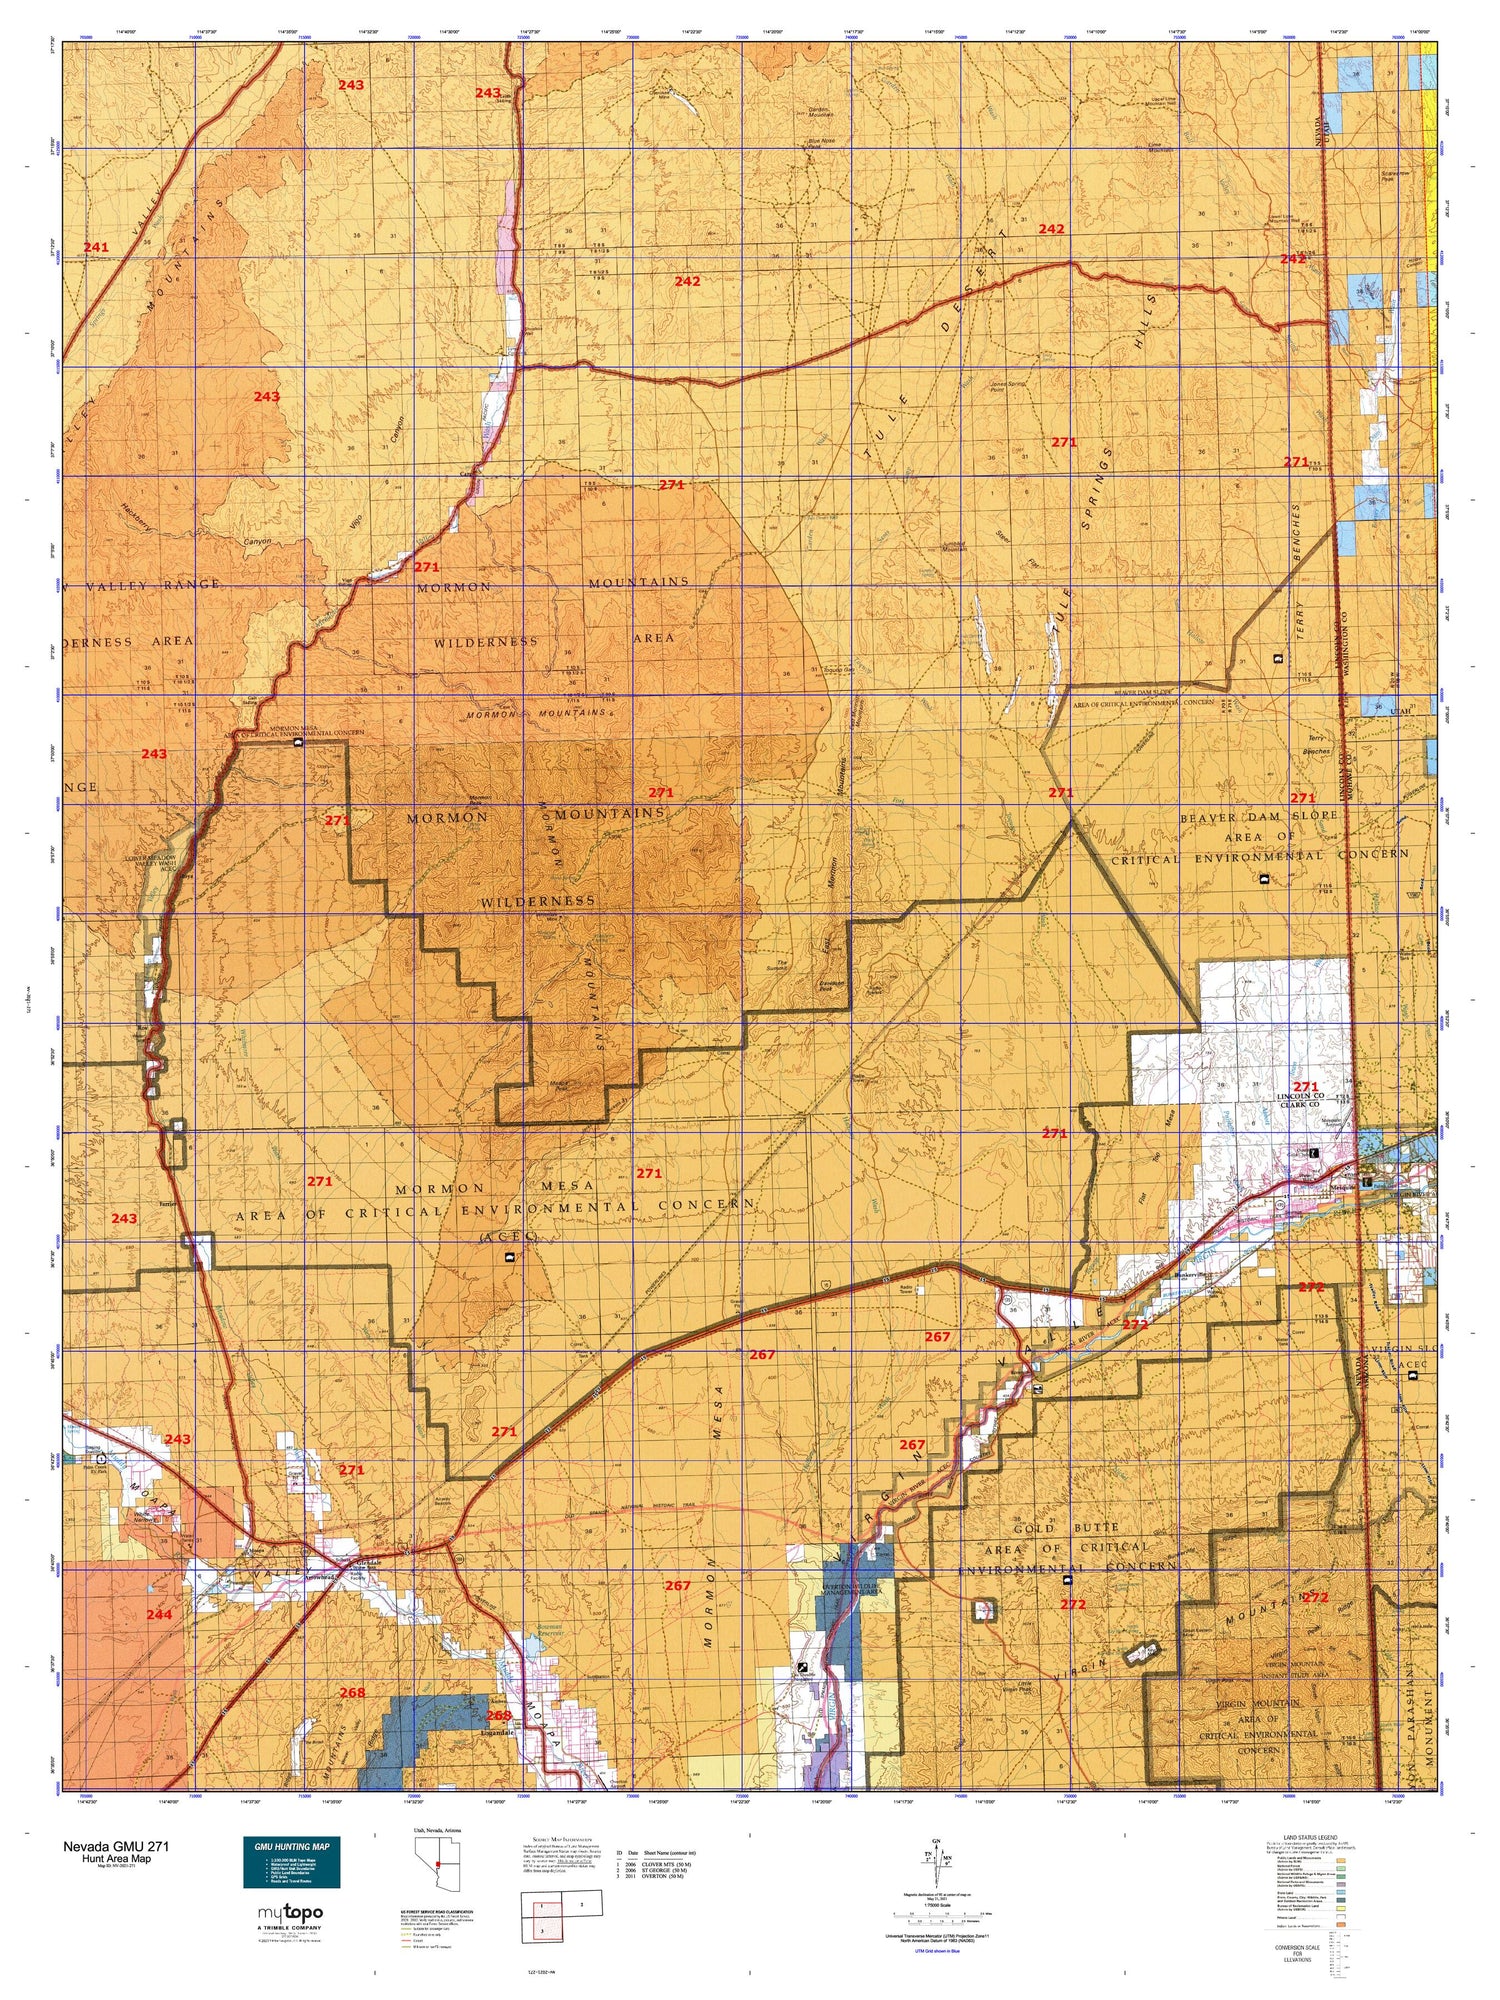 Nevada GMU 271 Map Image